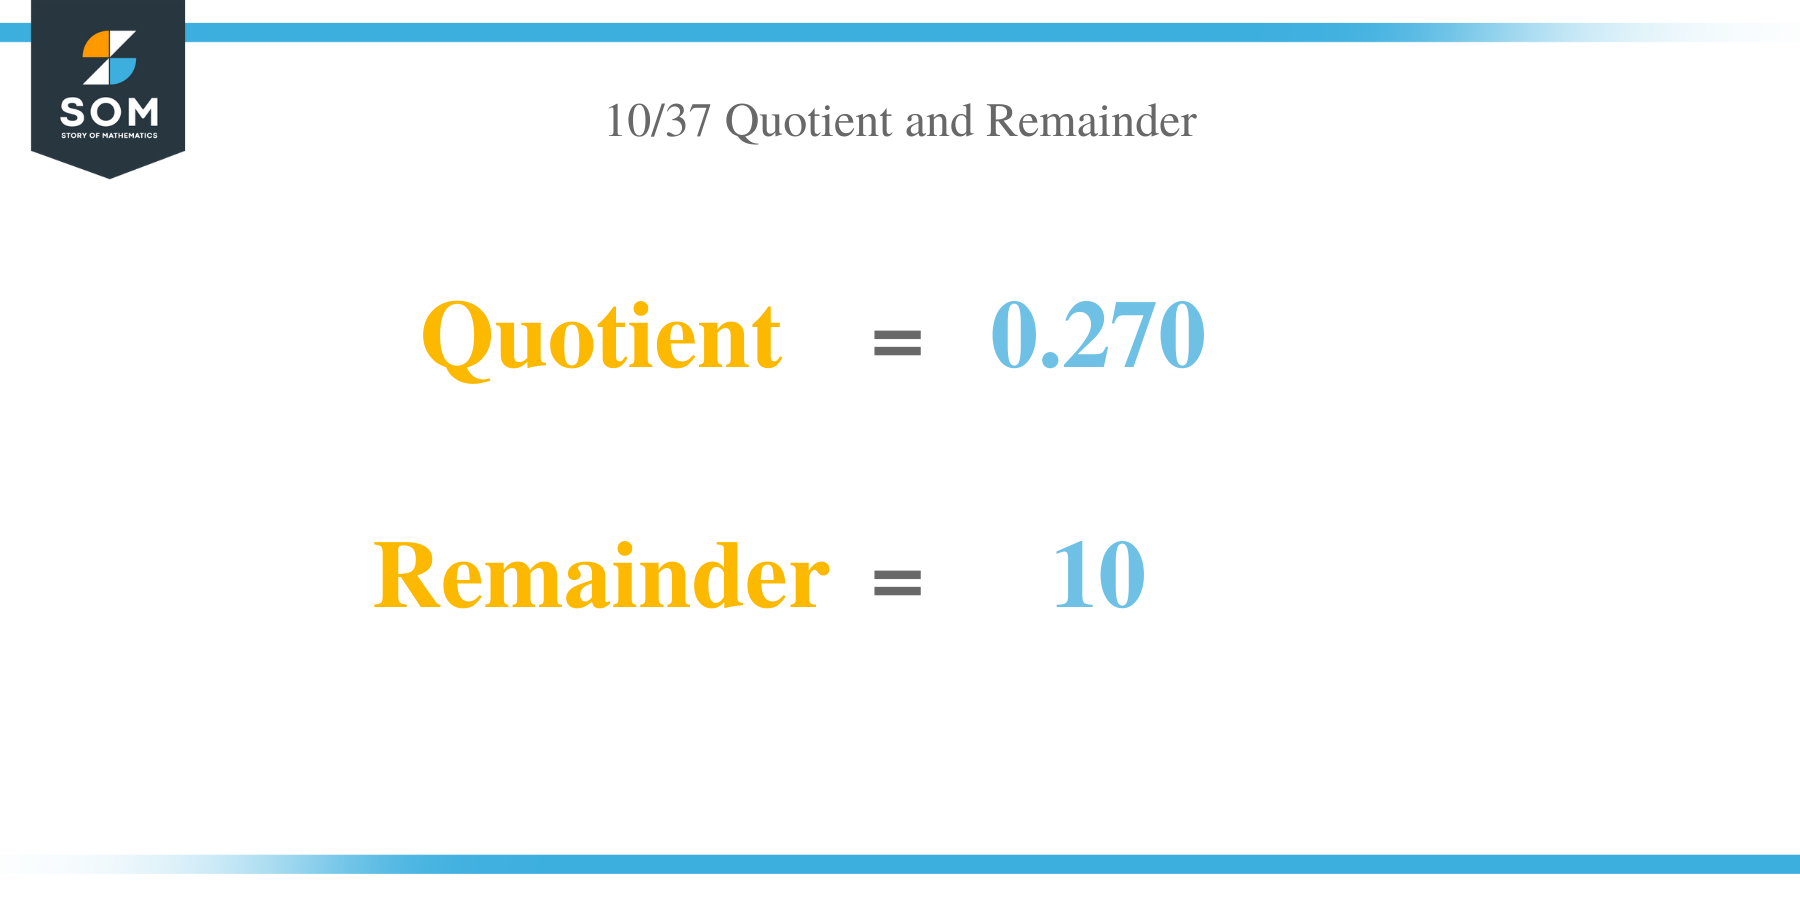 Quotient and Remainder of 10 per 37